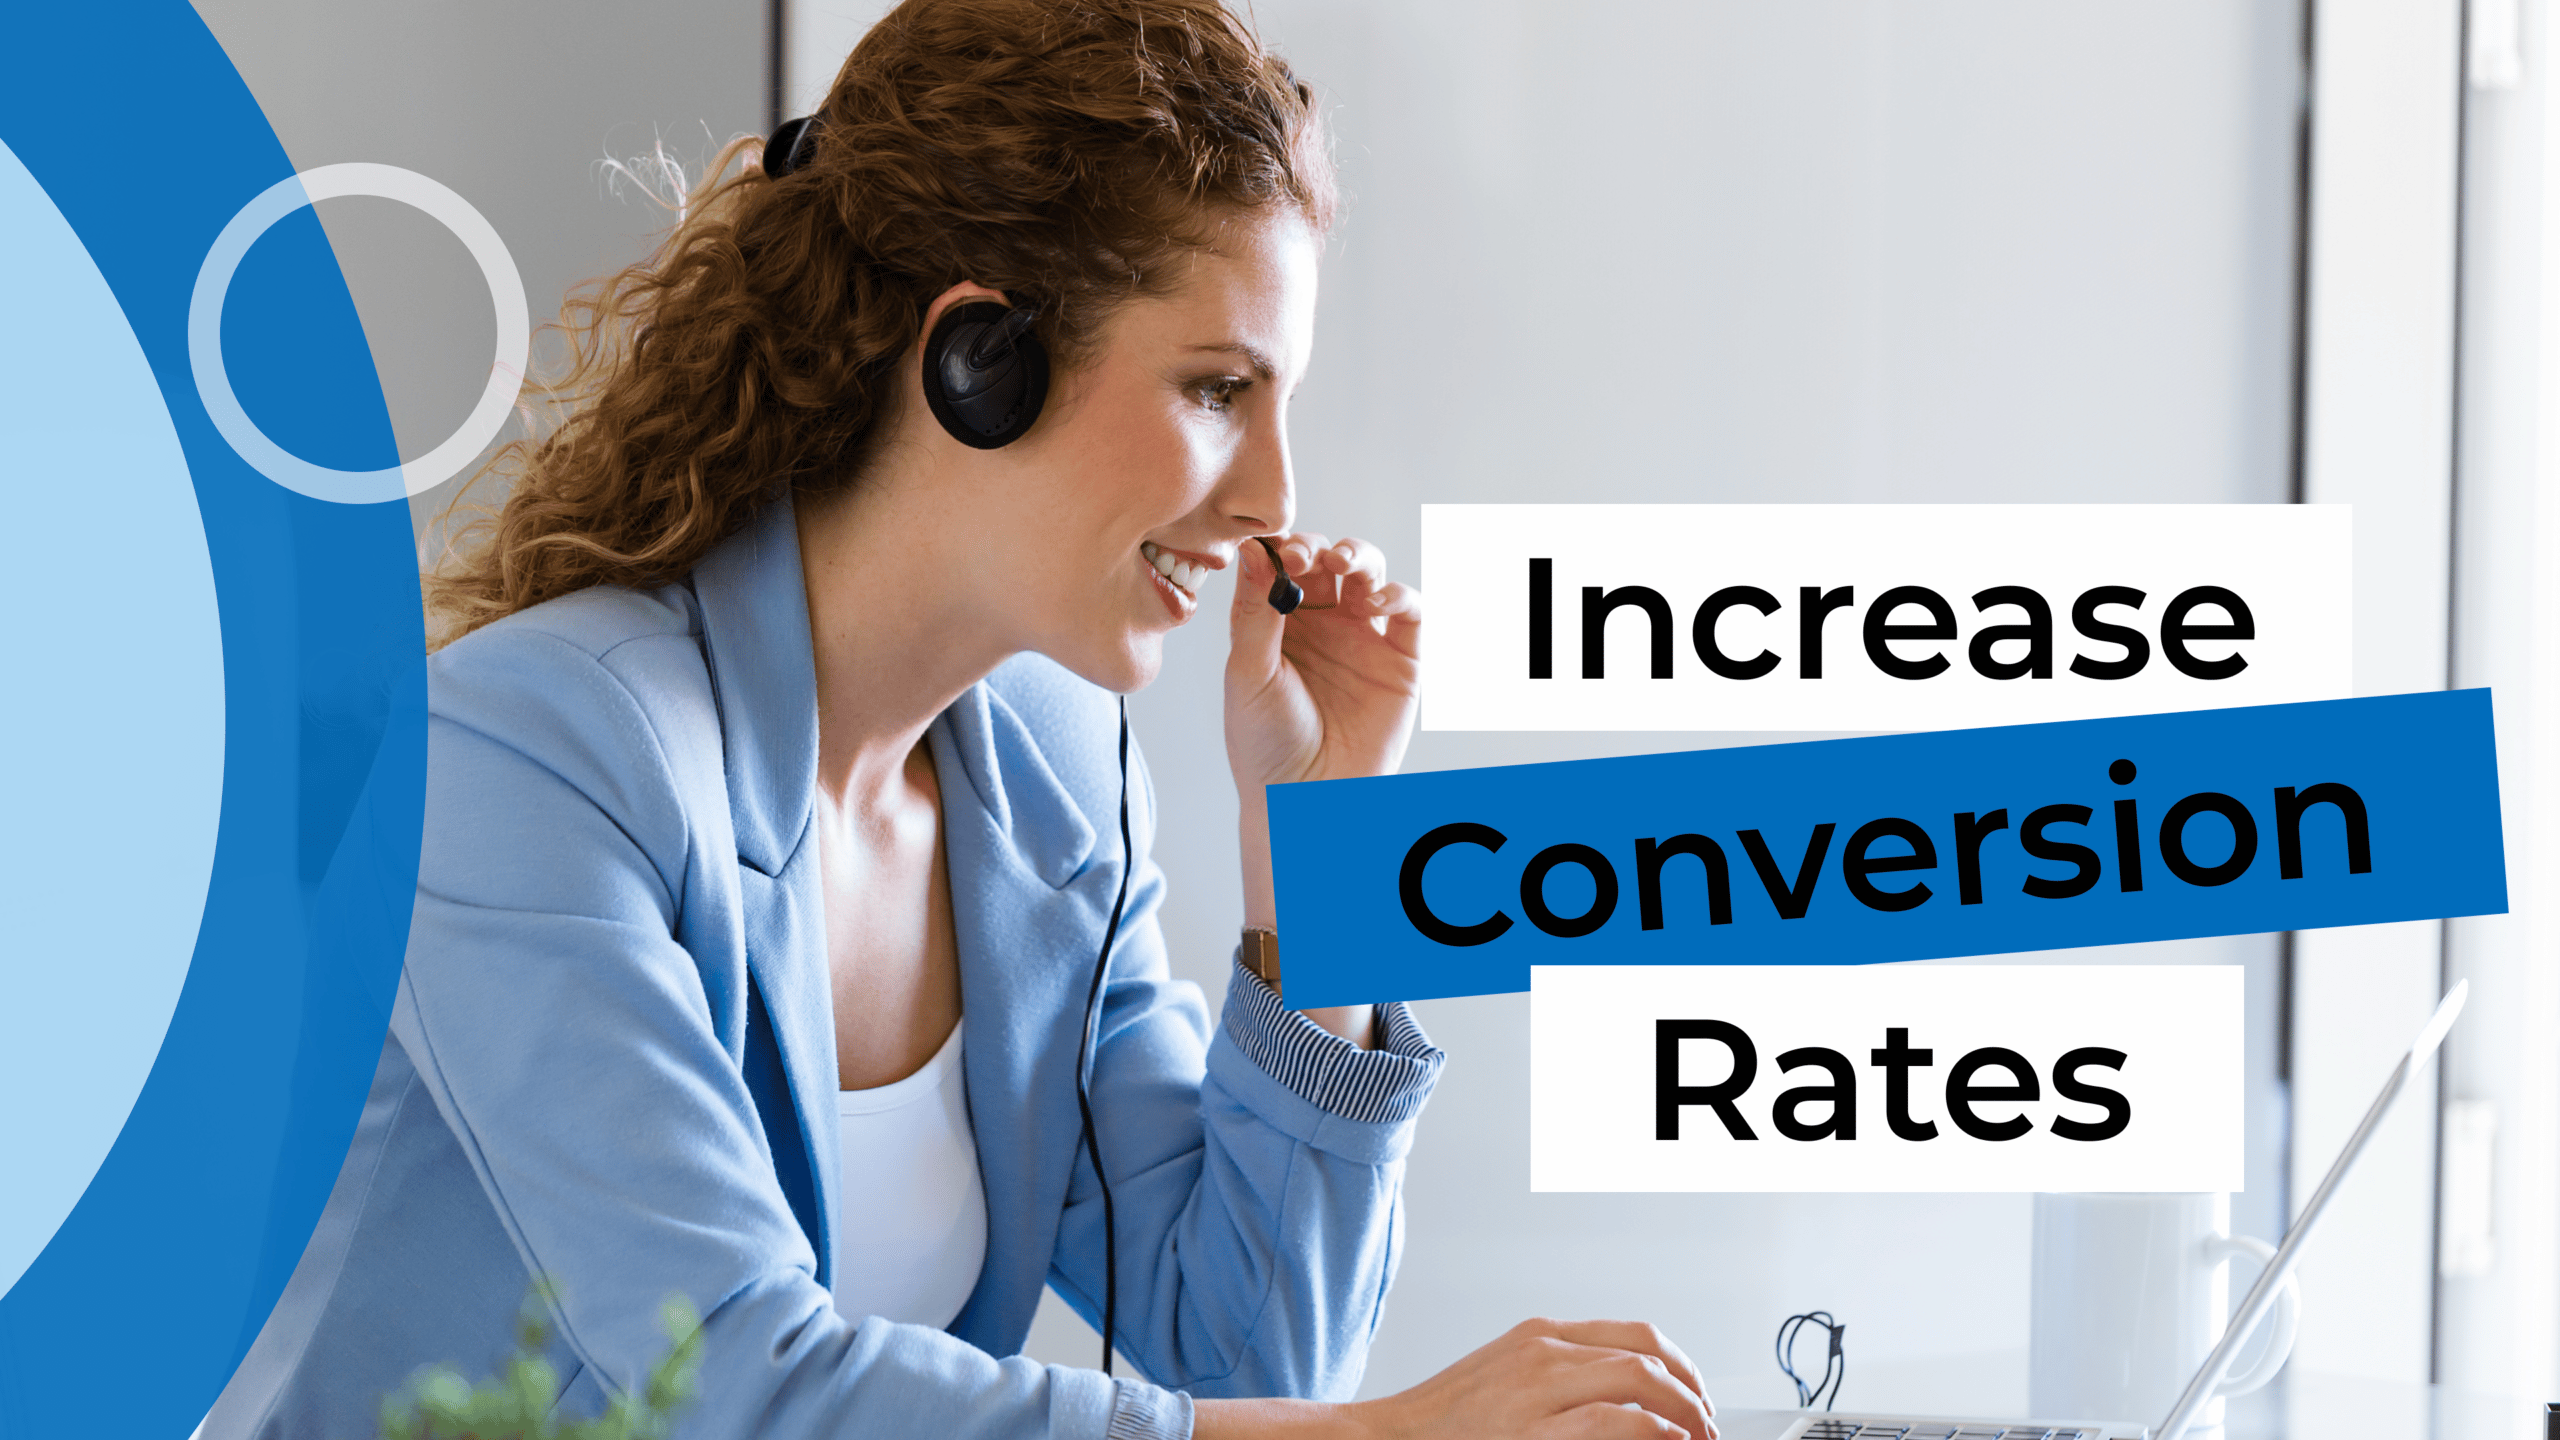 7 Ways SaaS Companies Can Increase Conversion Rates